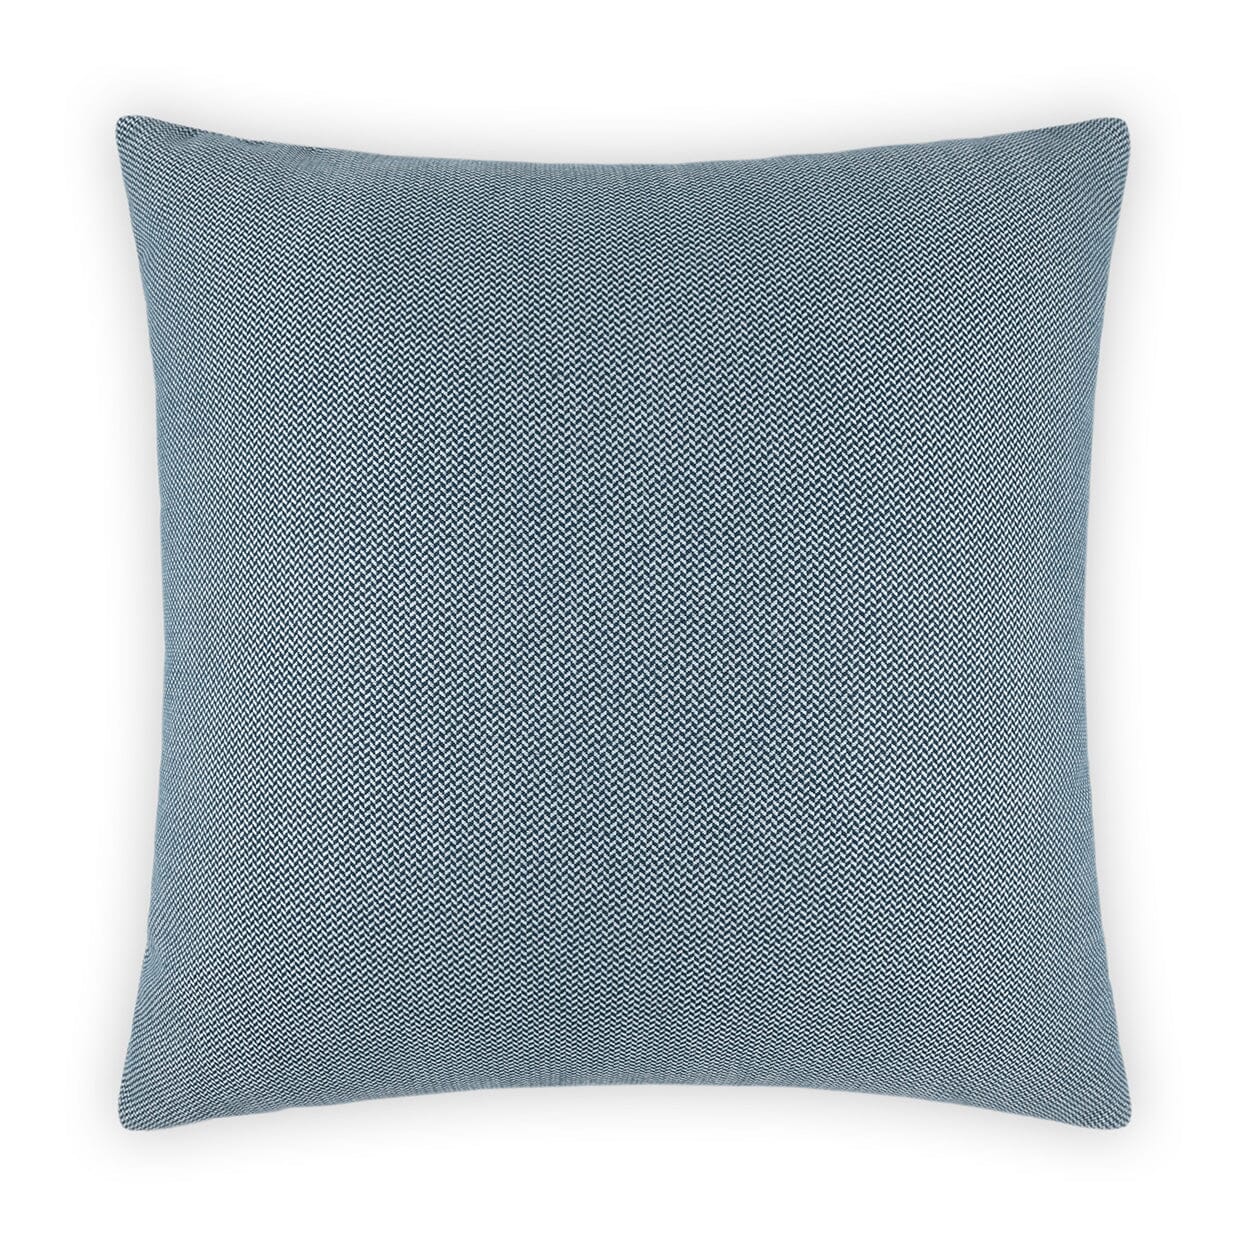 D.V. Kap 22" x 22" Outdoor Throw Pillow | Pyke Blue Pillows D.V Kap Outdoor